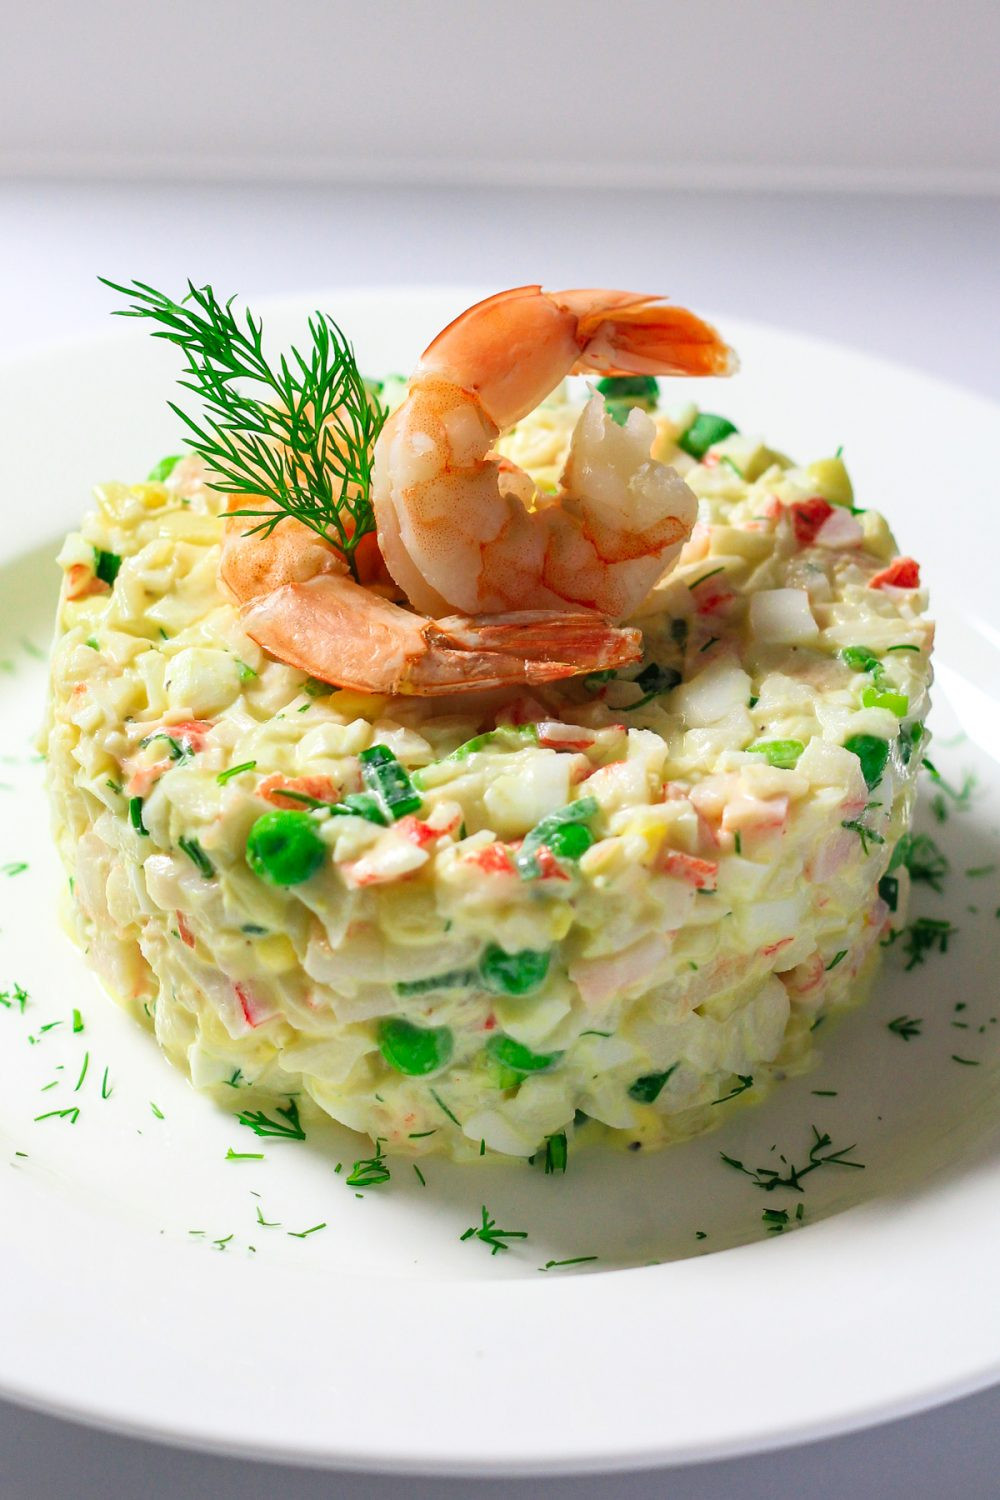 Seafood Salad Recipe Imitation Crab And Shrimp
 Imitation Crab Salad with Shrimp Recipe VIDEO Simply